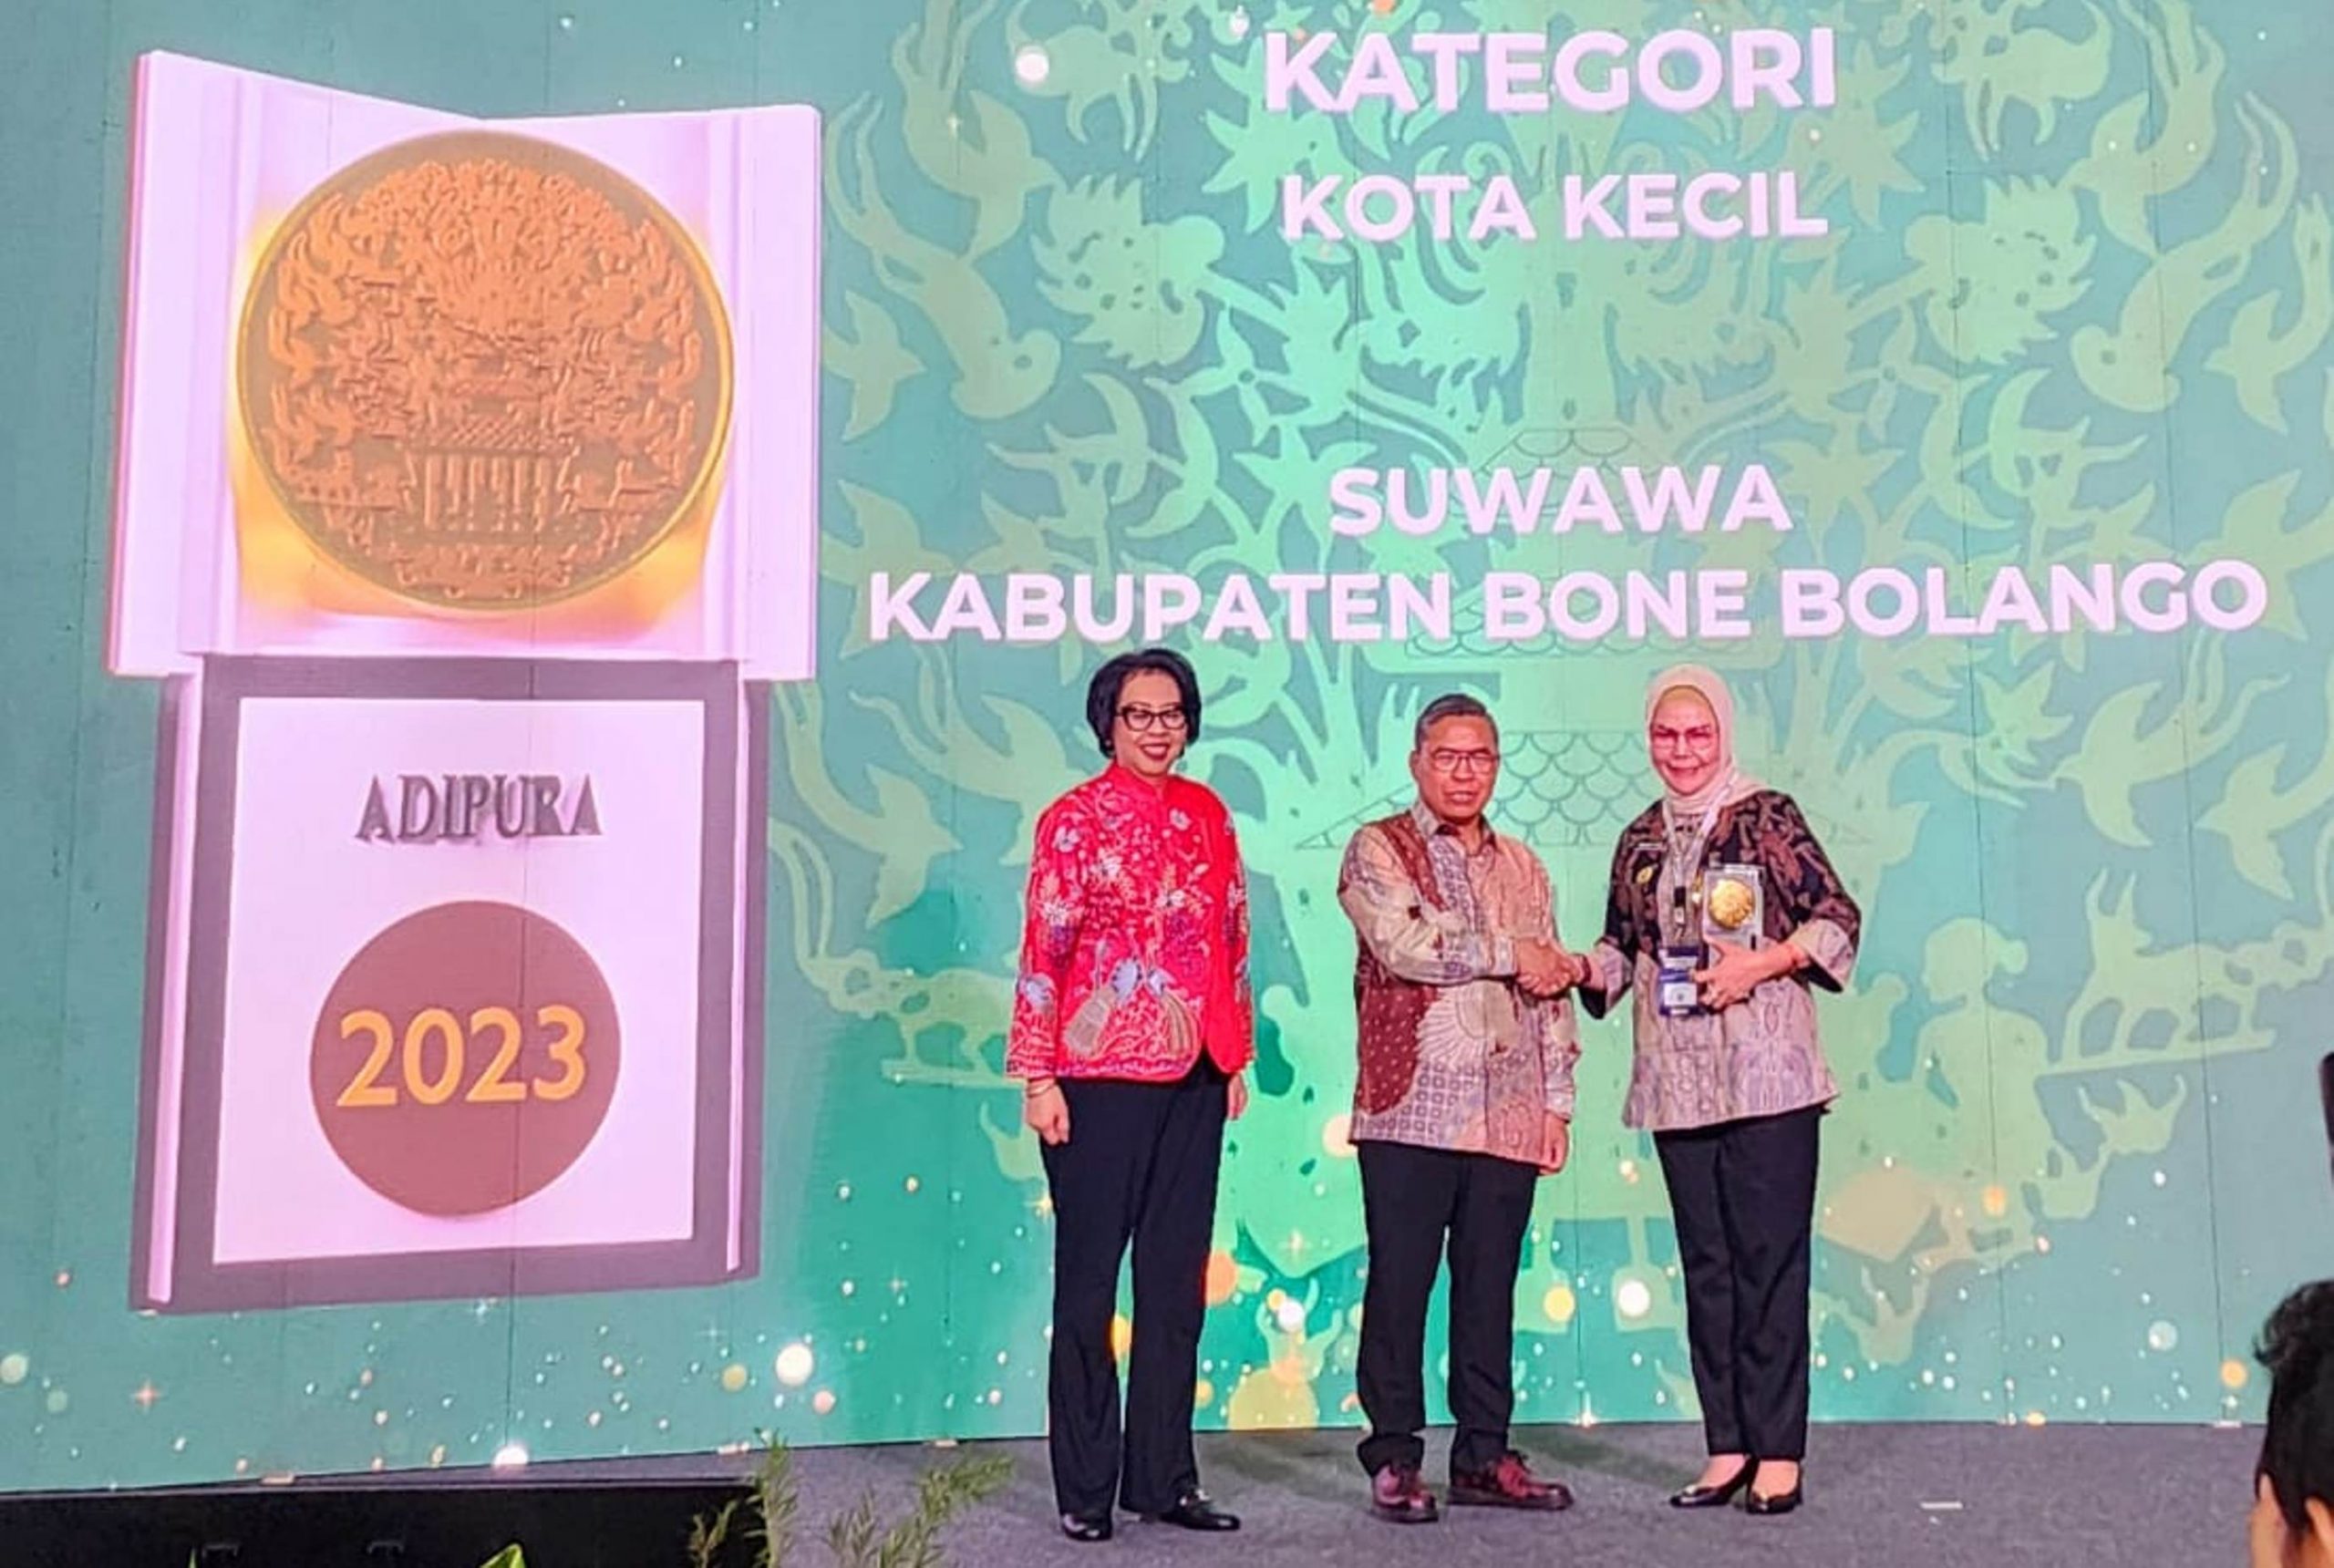 Bupati Merlan S. Uloli menerima penghargaan Piala Adipura tahun 2023 dari KLHK Republik Indonesia, di Gedung Manggala Wanabakti Kementerian LHK, Jakarta, Selasa (5/3/2024)./Hibata.id